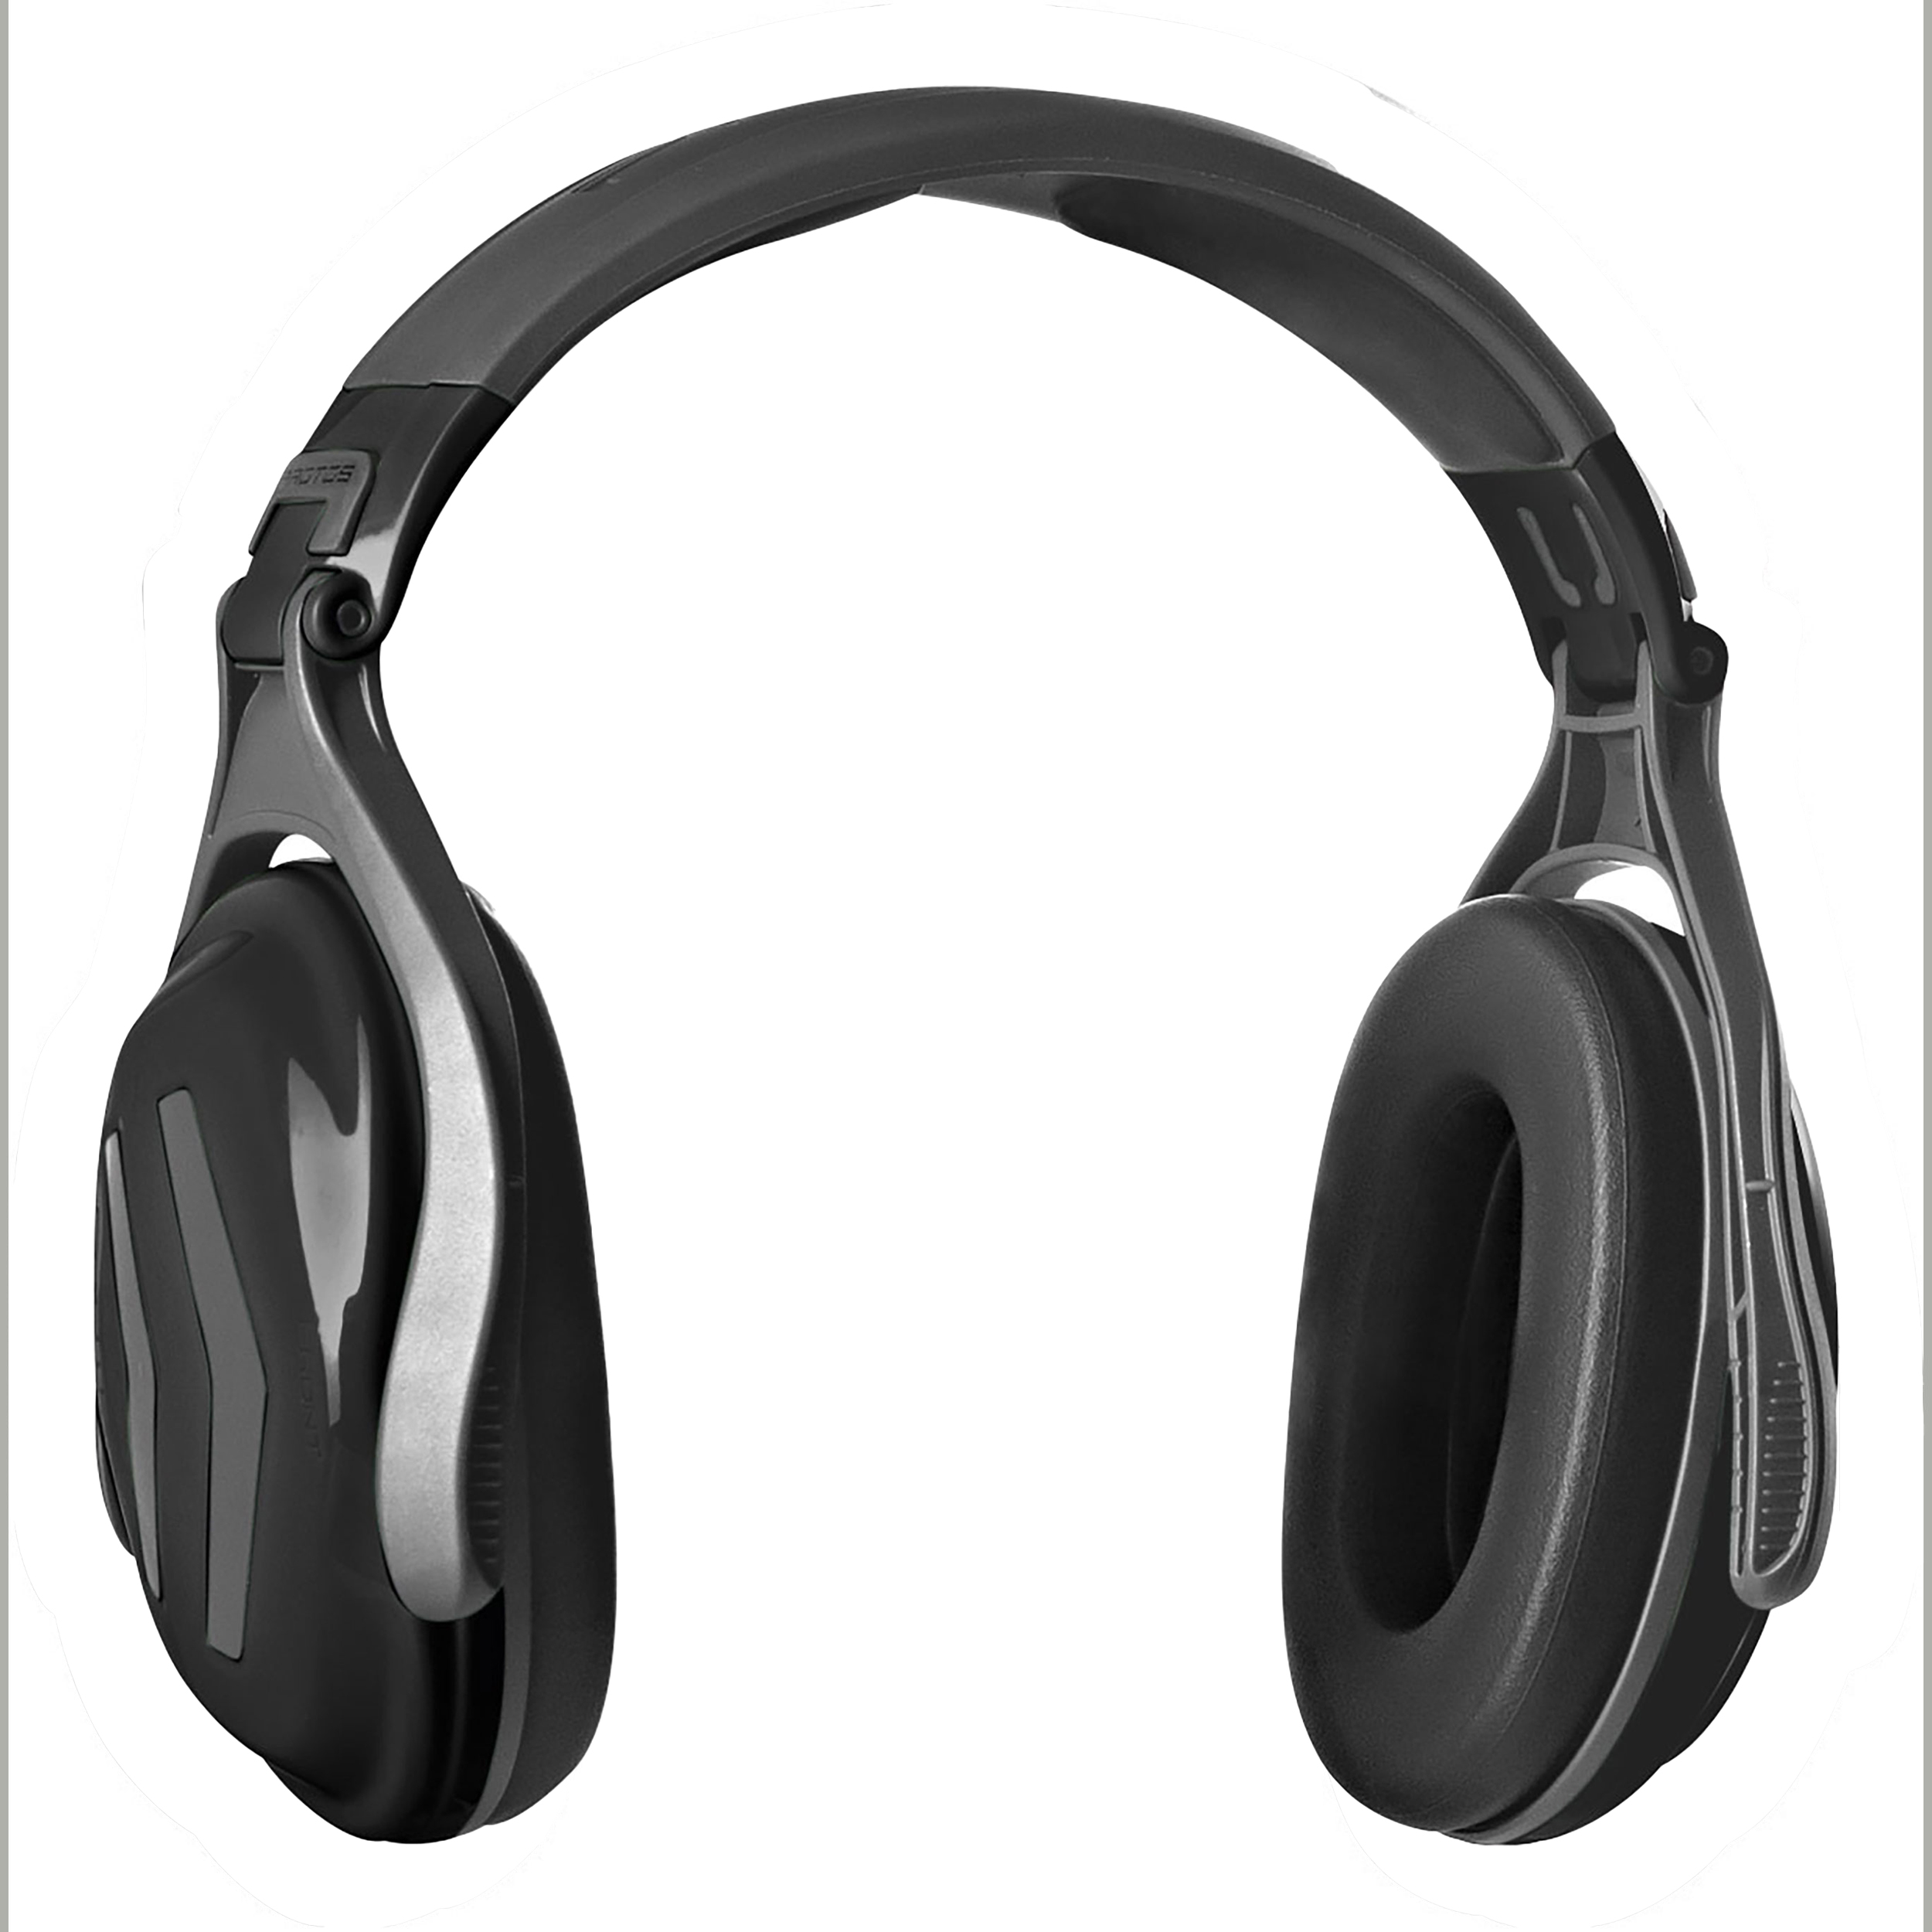 Protection auditive avec serre-tête Protos Headset Integral